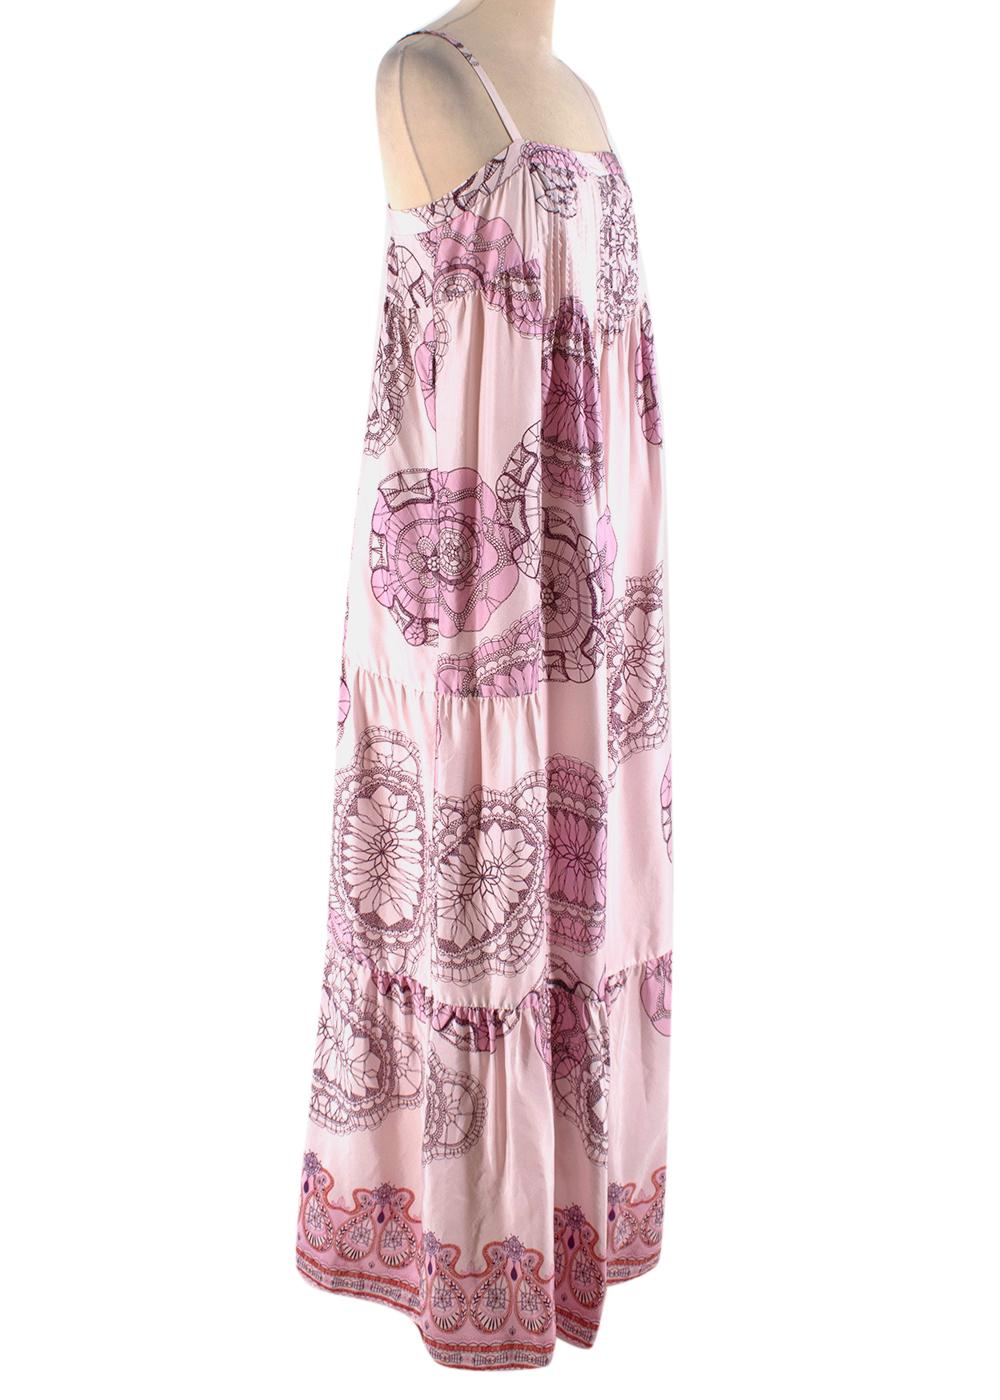 Tibi Pink Floral Patterned Maxi Dress - Size US 4 For Sale 1